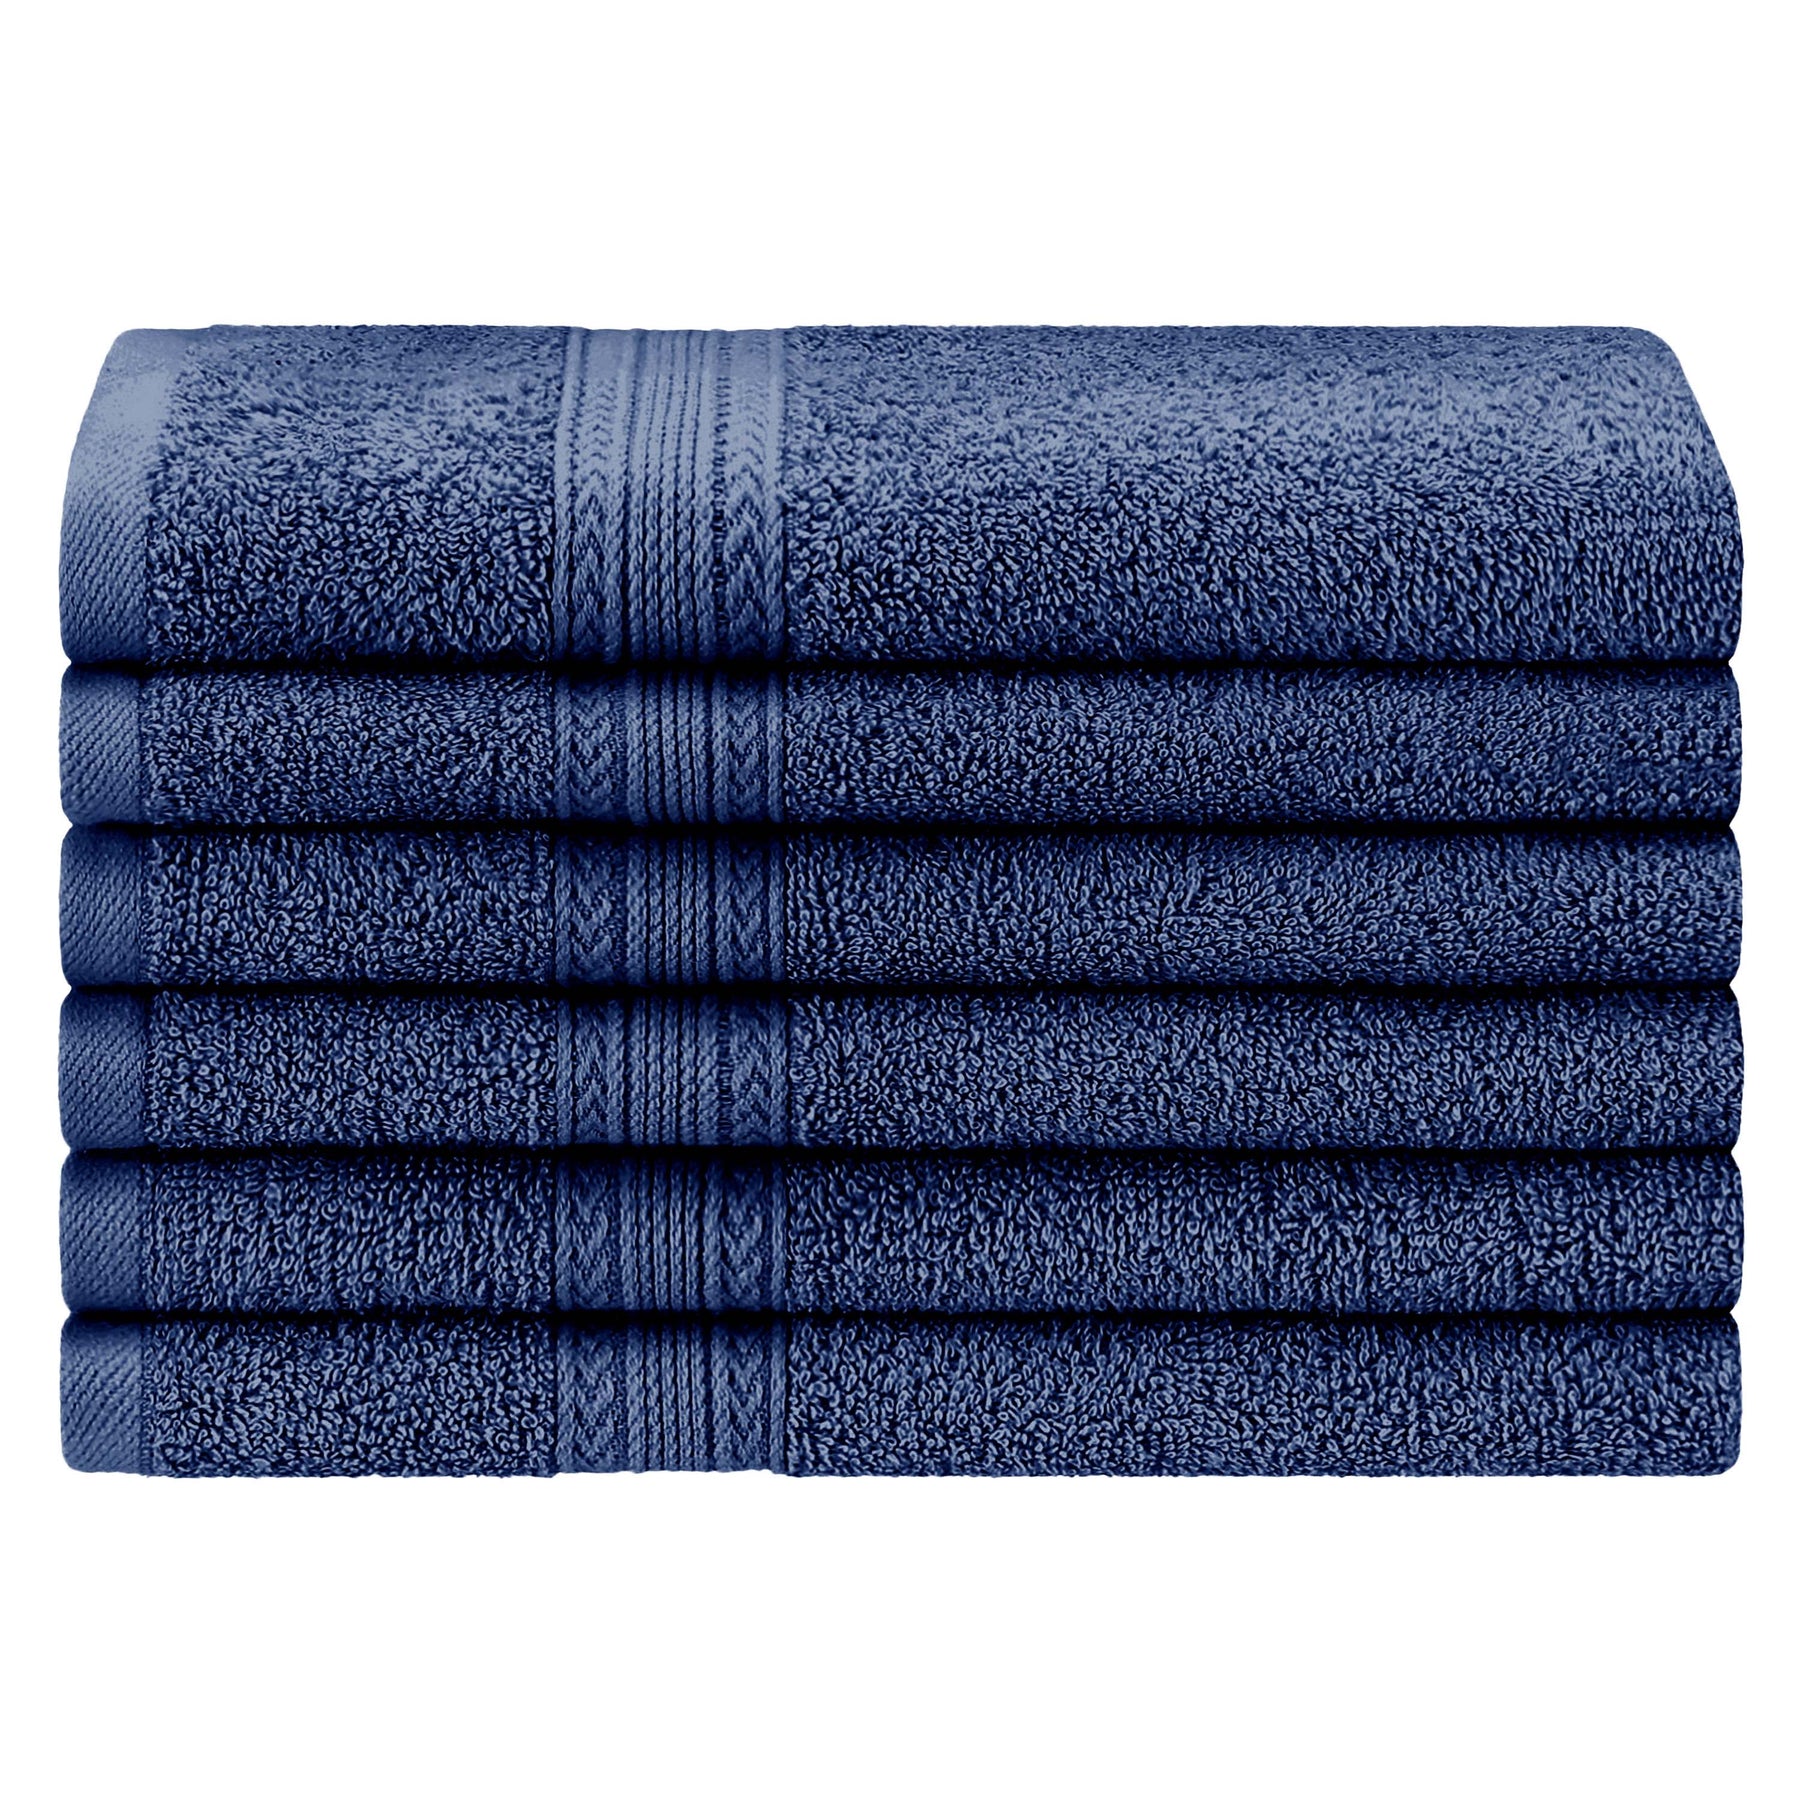 Superior Eco-Friendly Ring Spun Cotton 6-Piece Hand Towel Set - Navy Blue